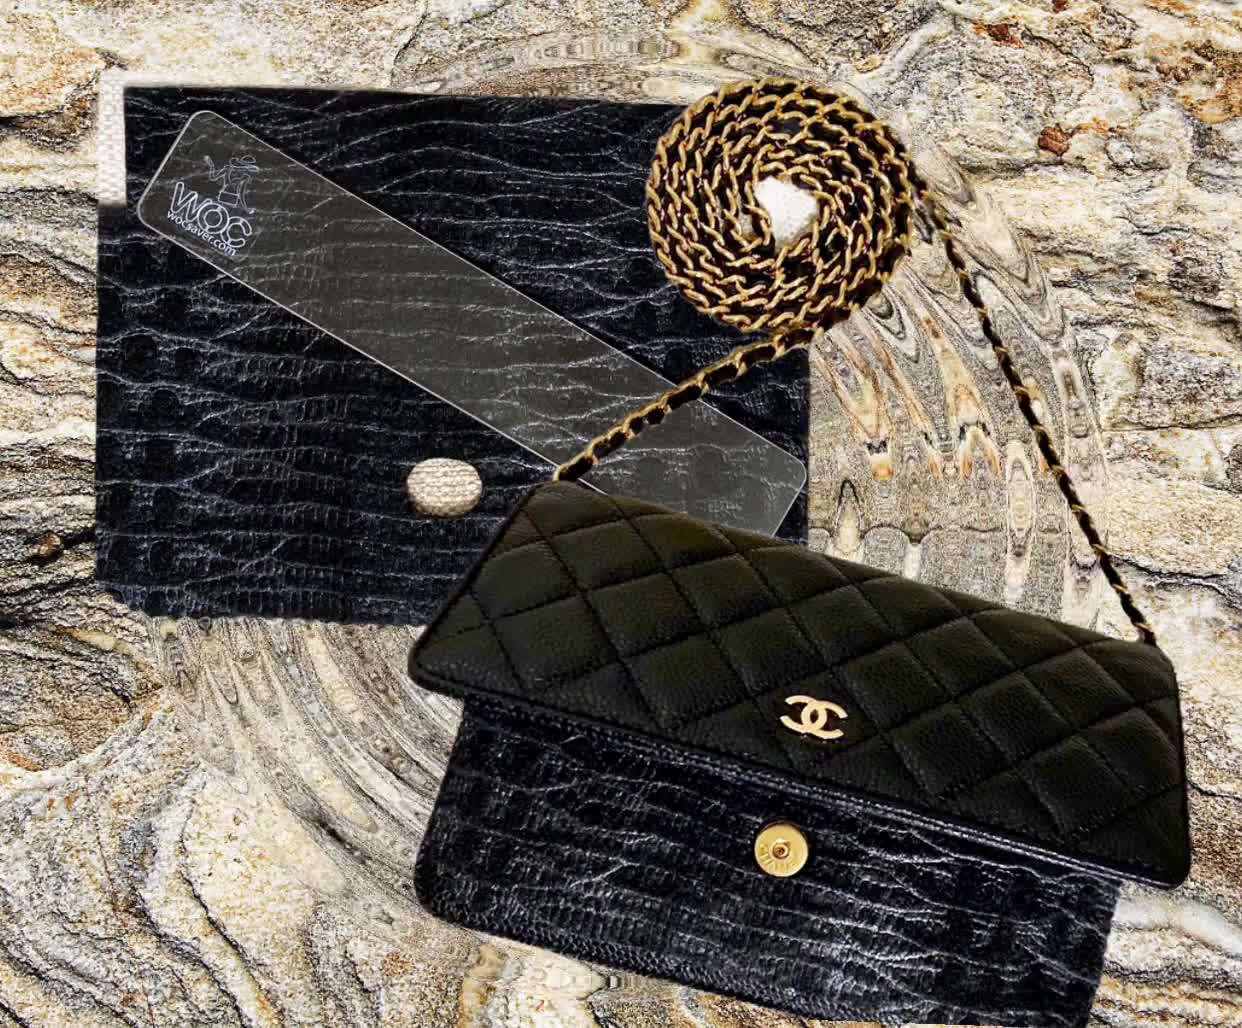 Chanel New Clutch Bag: Meet WOC's Big Sister